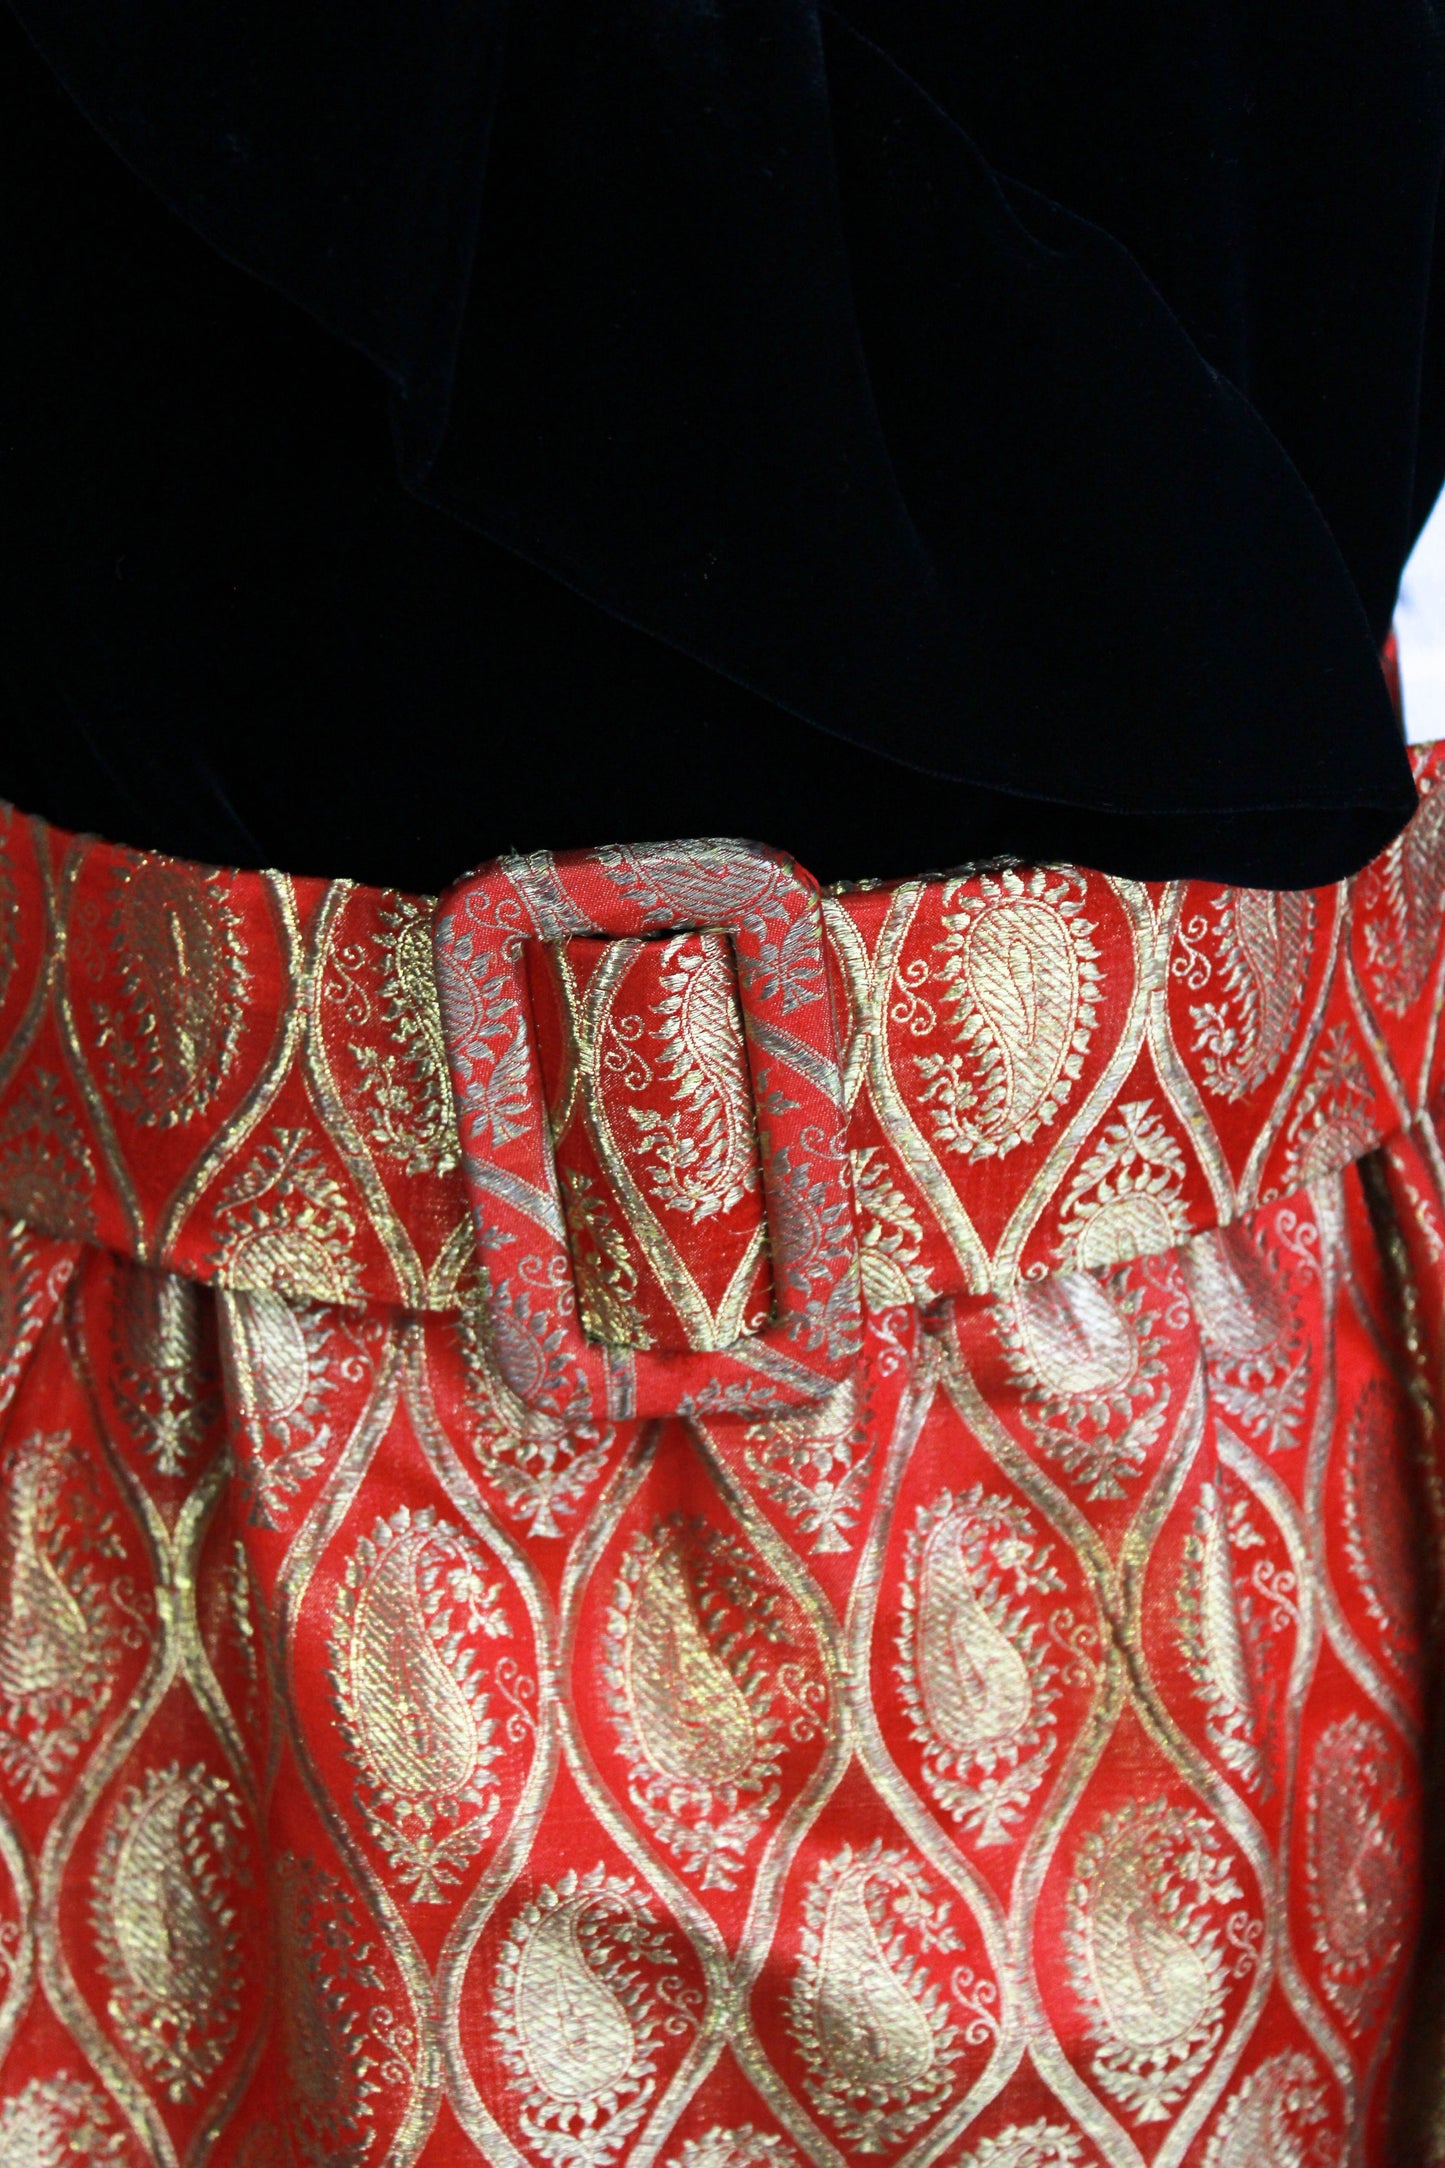 1970s maxi dress black velvet with red and gold metallic brocade skirt, ruffle collar belt close up